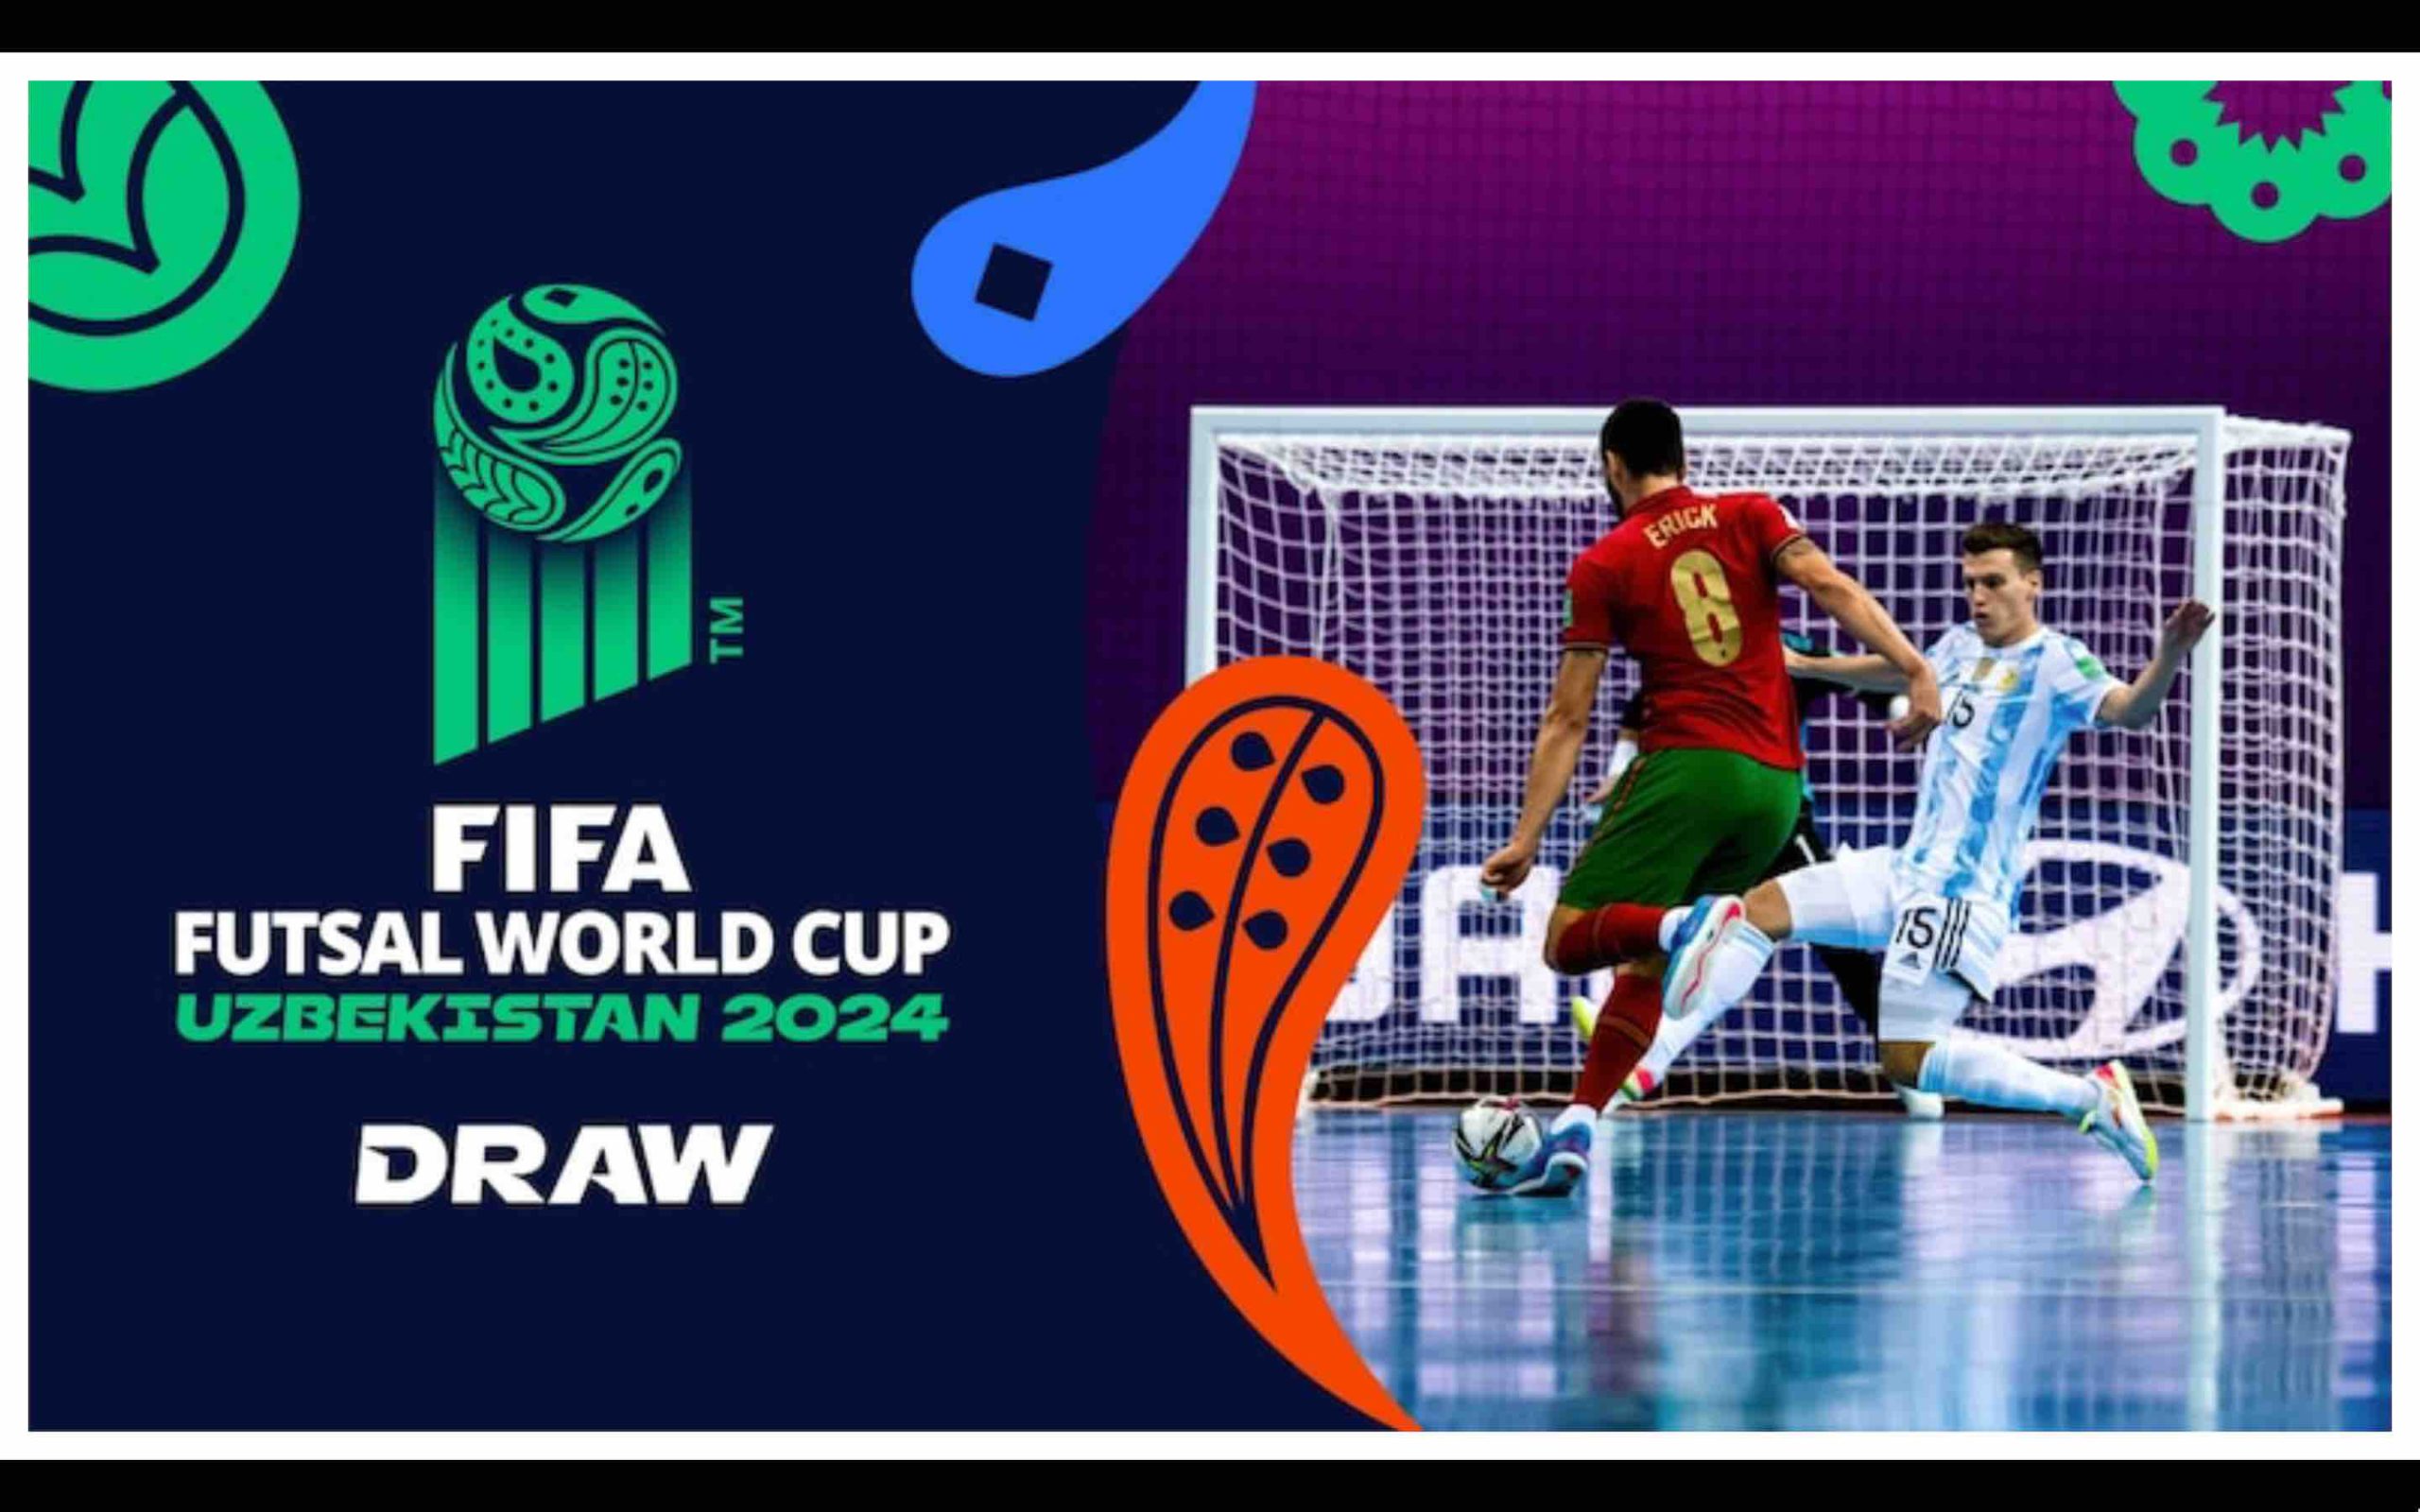 Coupe du Monde de futsal Ouzbékistan 2024 Maroc Morocco World Cup